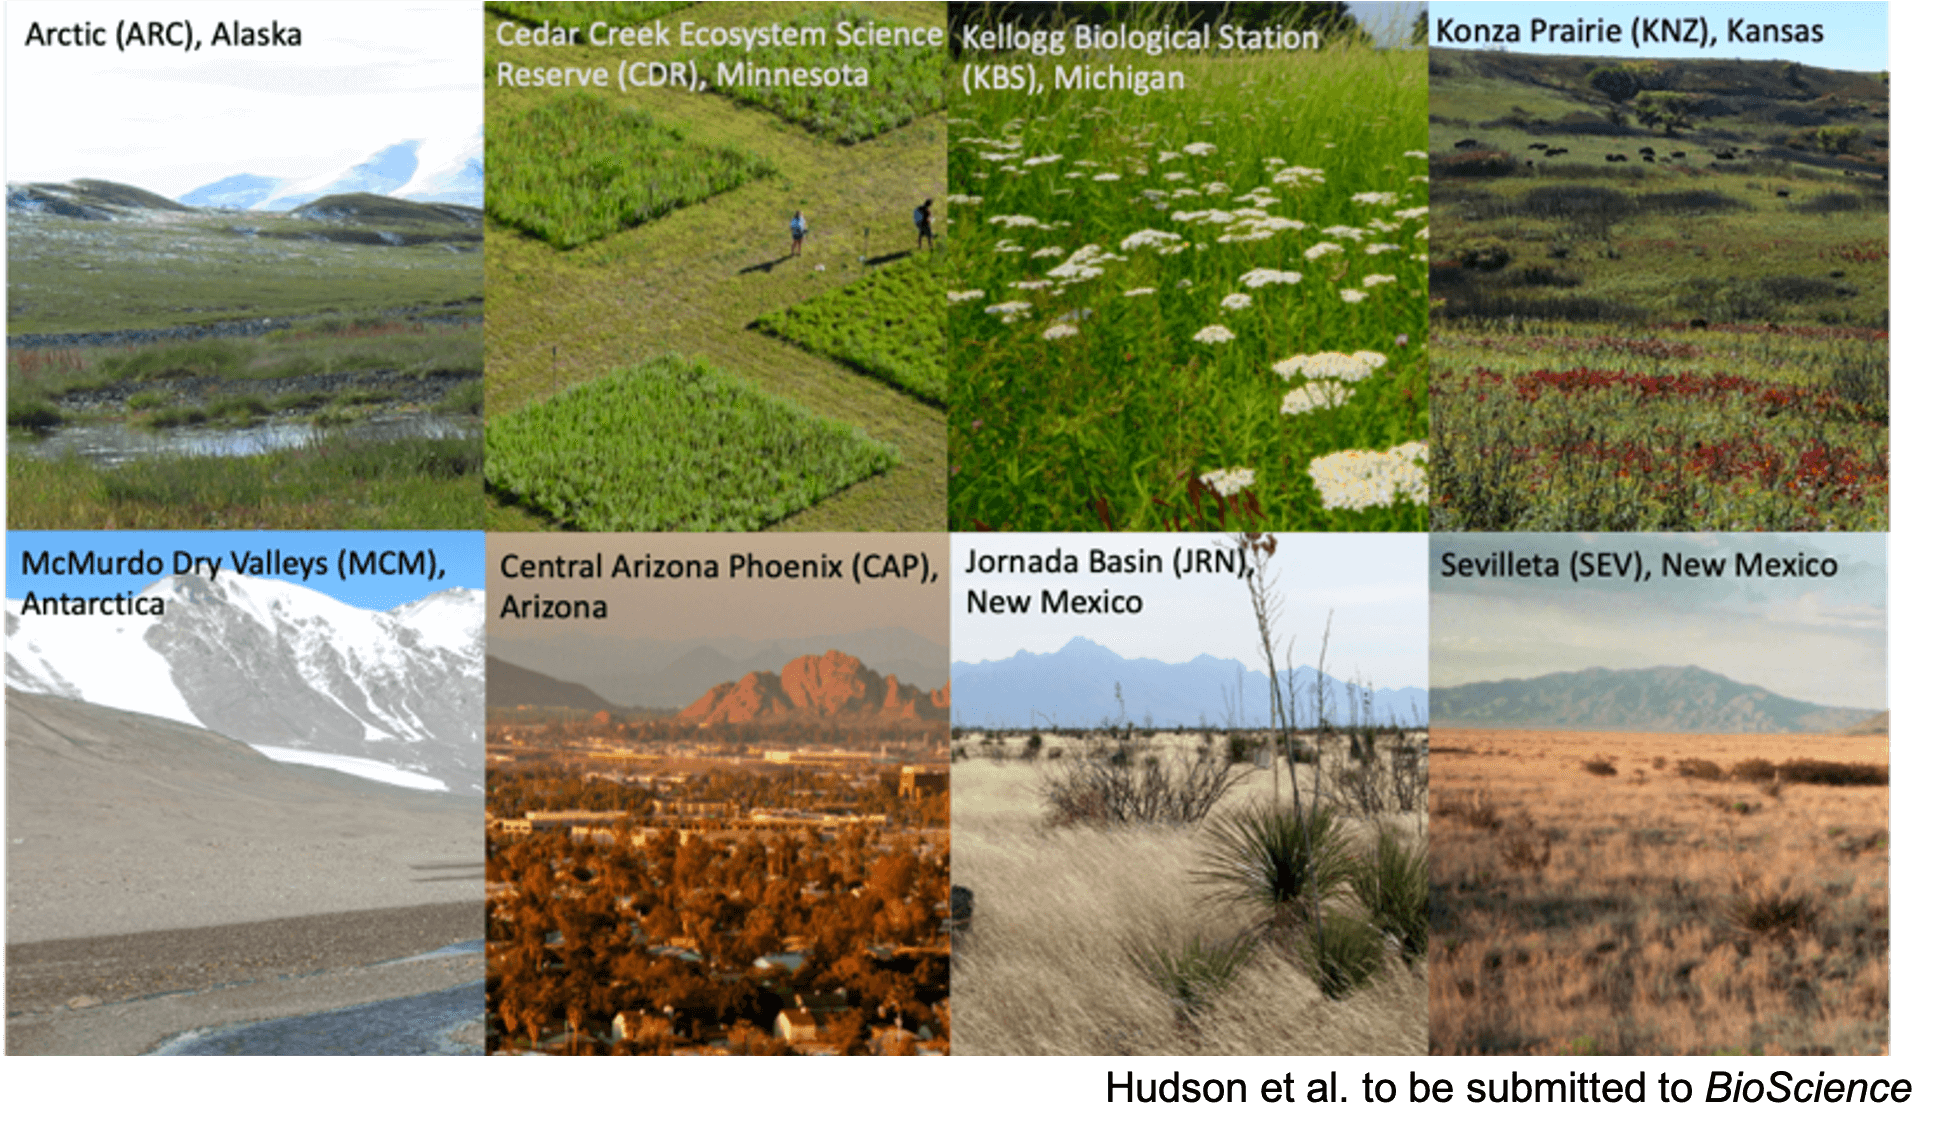 Photos of various ecosystems